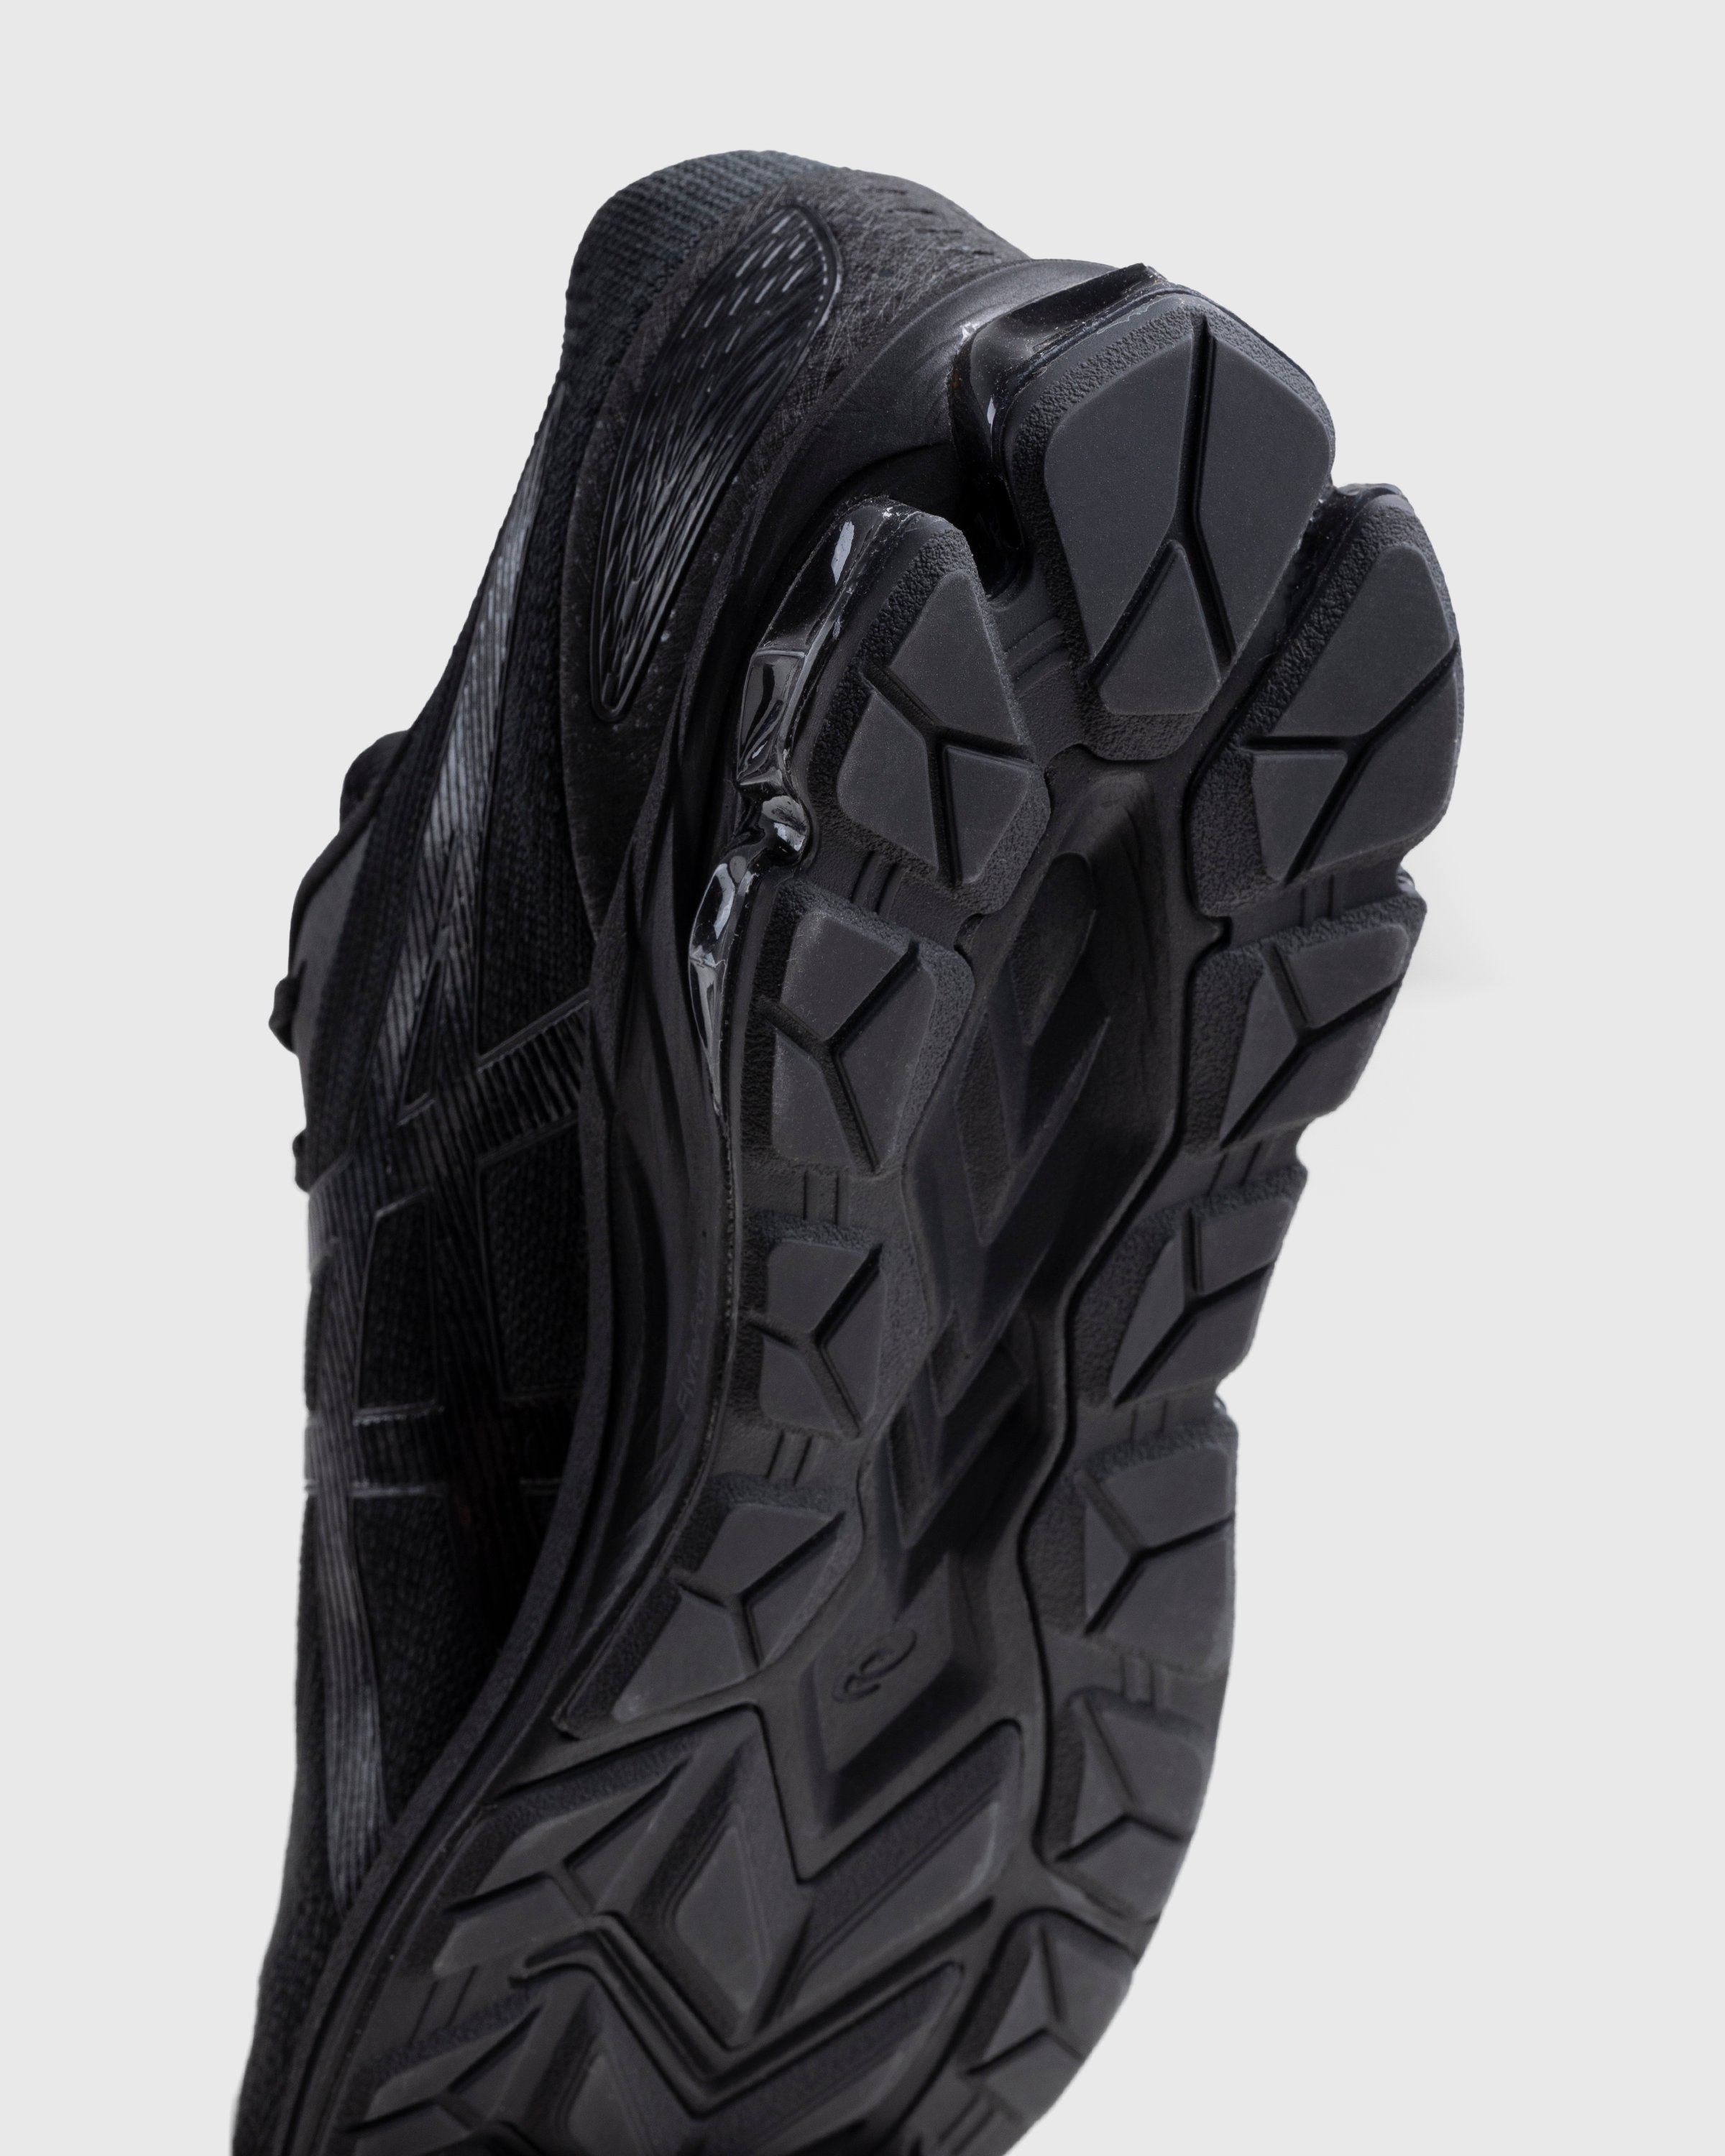 asics - Gel-Quantum 180 VII Black/Black - Footwear - Black - Image 6